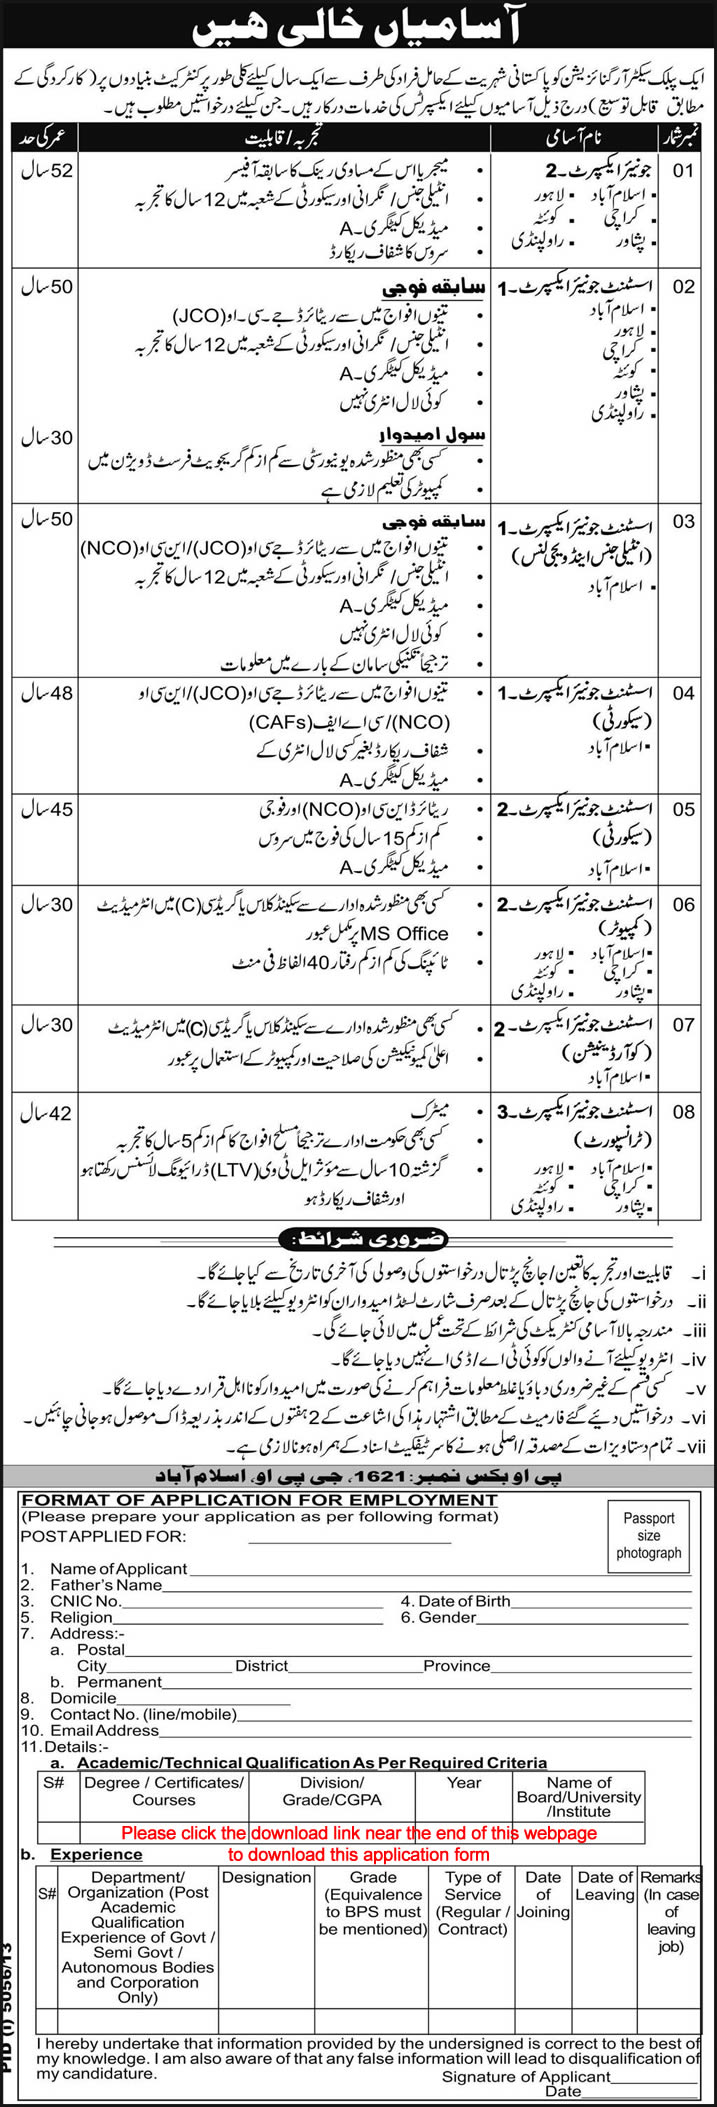 PO Box 1621 GPO Islamabad Jobs 2014 June Application Form Download